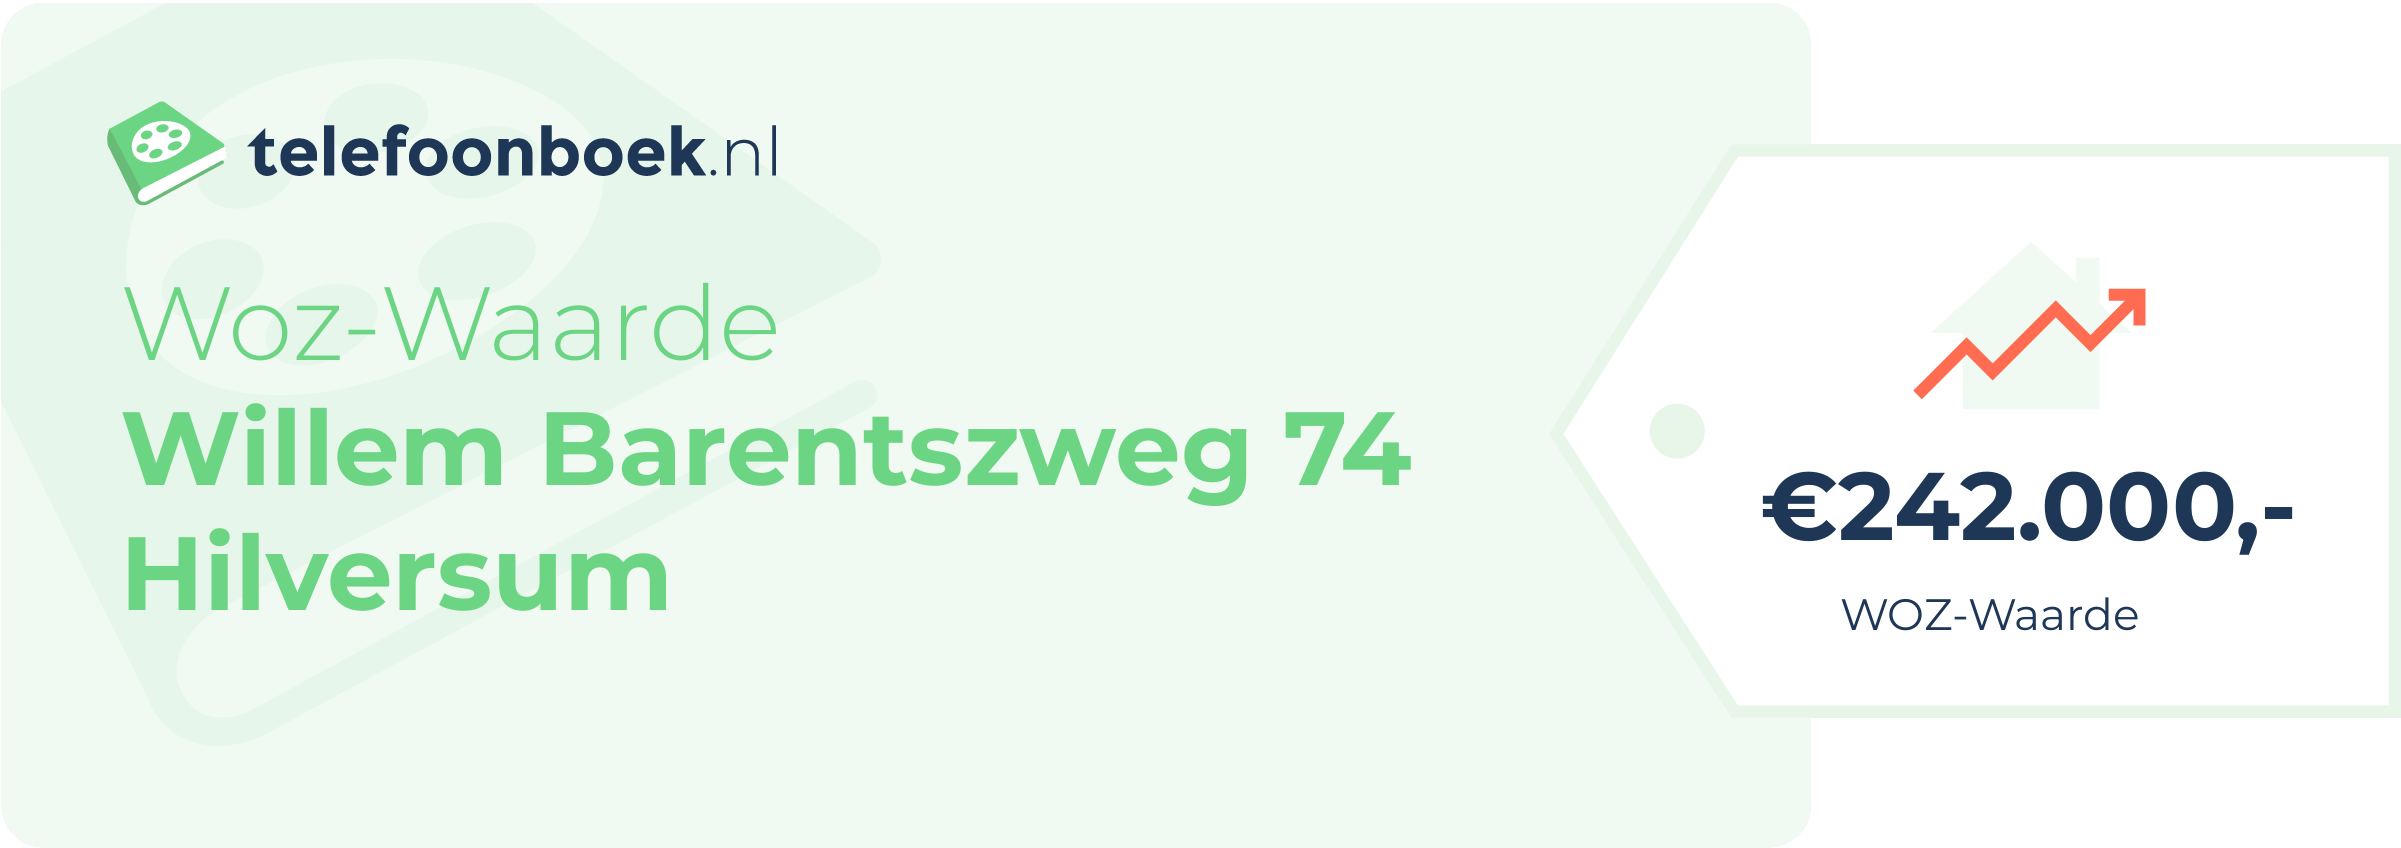 WOZ-waarde Willem Barentszweg 74 Hilversum